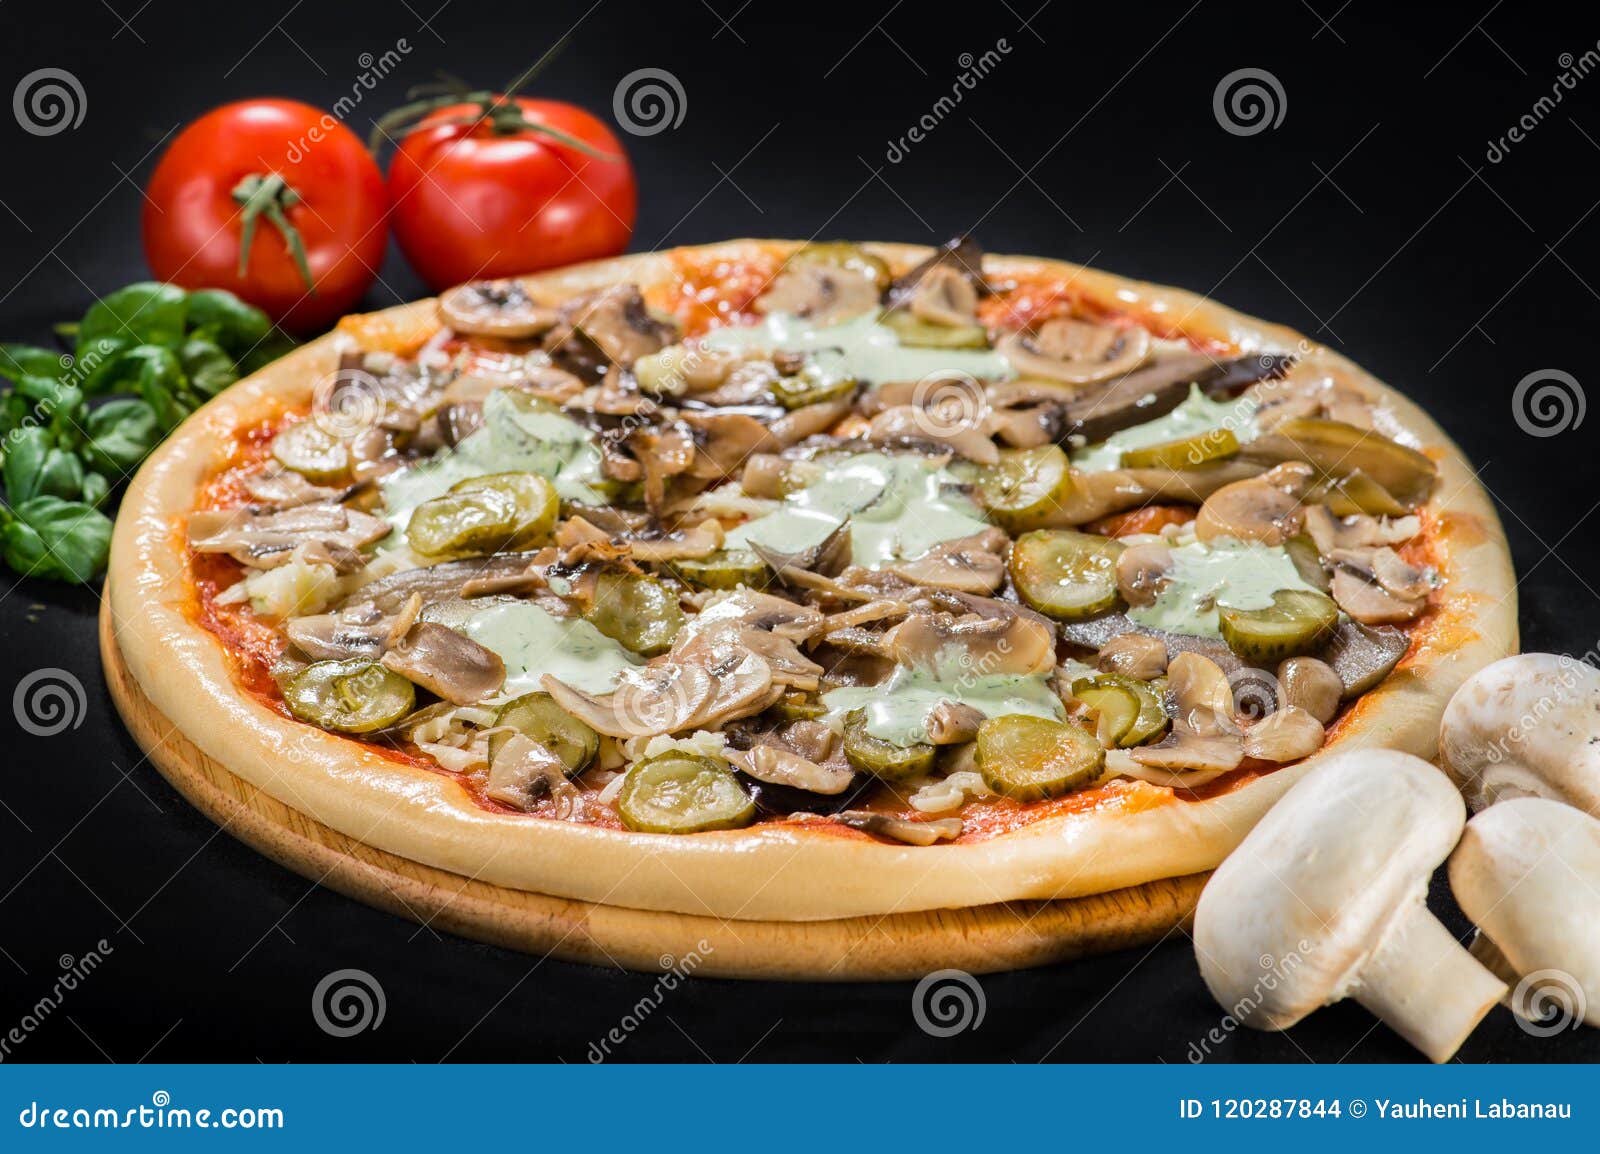 пицца грибная с помидорами фото 64